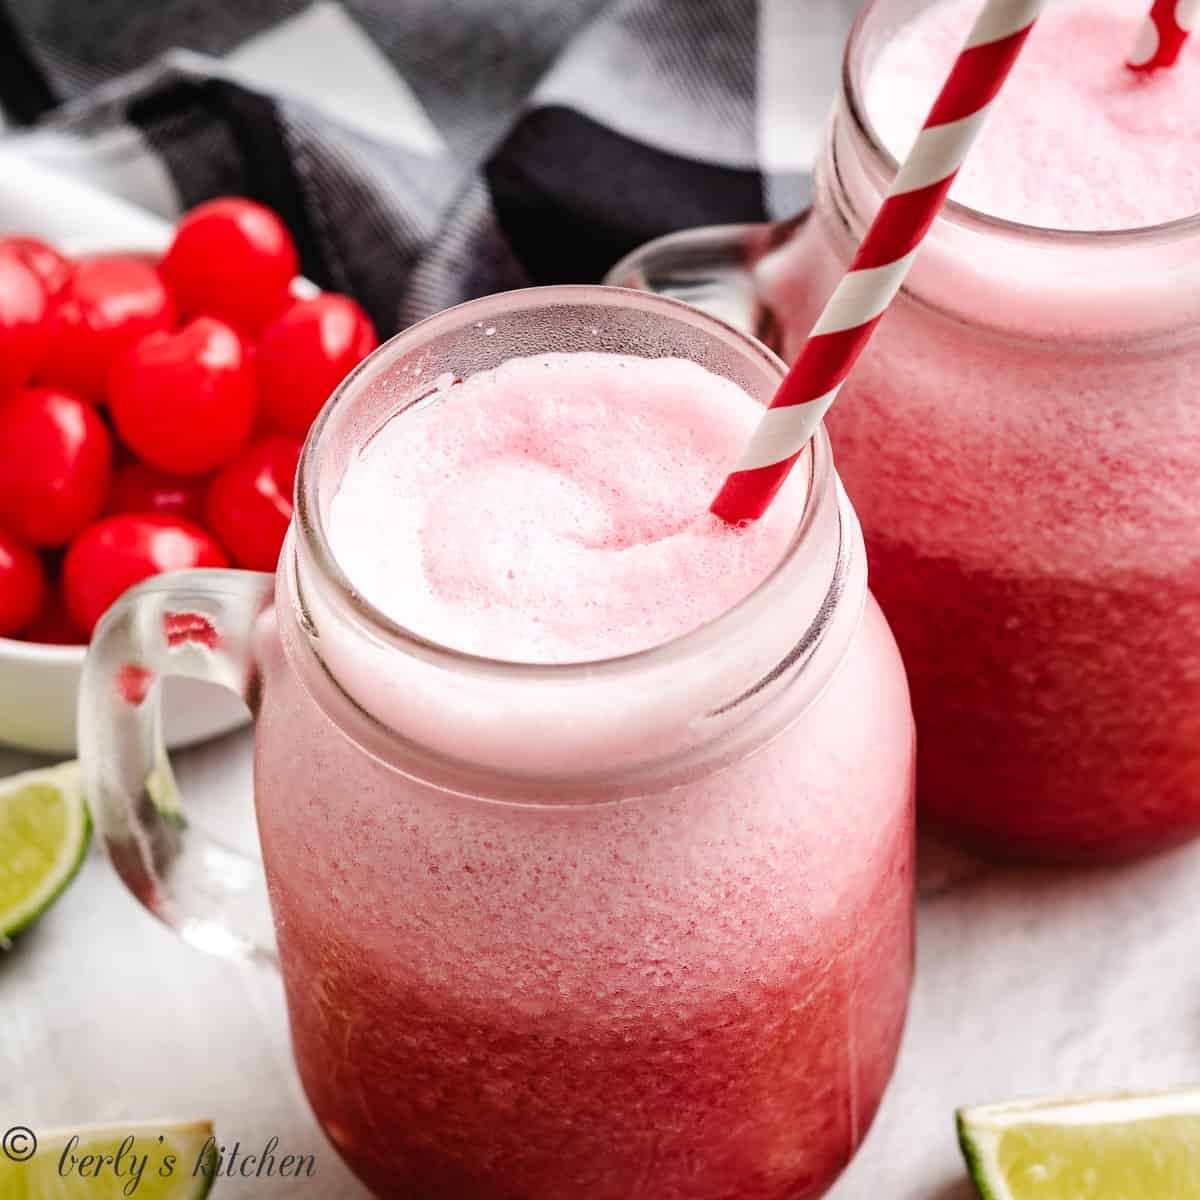 Cherry Limeade Slush